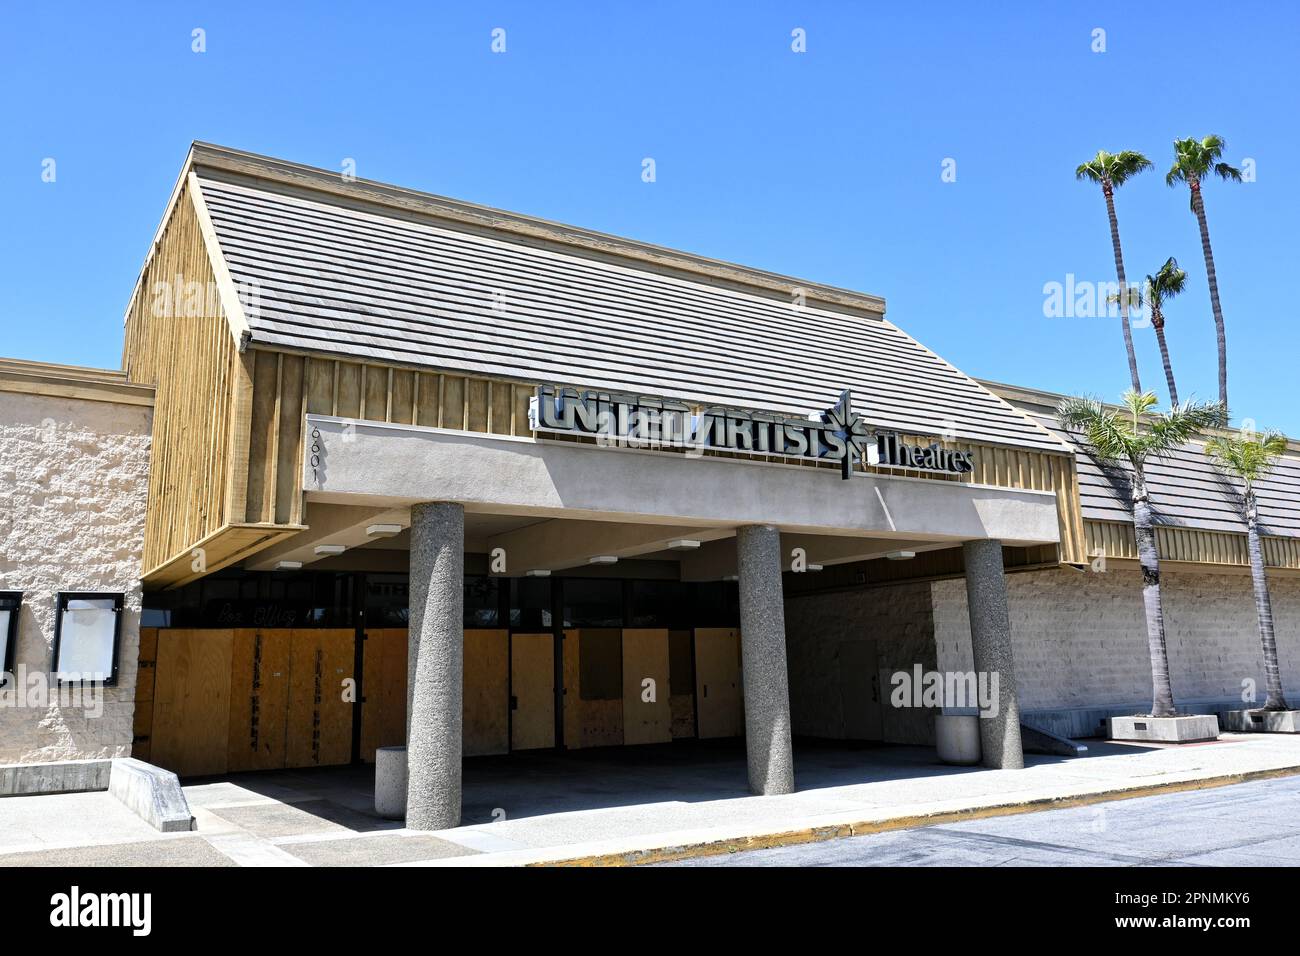 LONG BEACH, KALIFORNIEN - 19. April 2023: Ein geschlossenes United Artists Theatre im Market Place am Pacific Coast Highway. Stockfoto